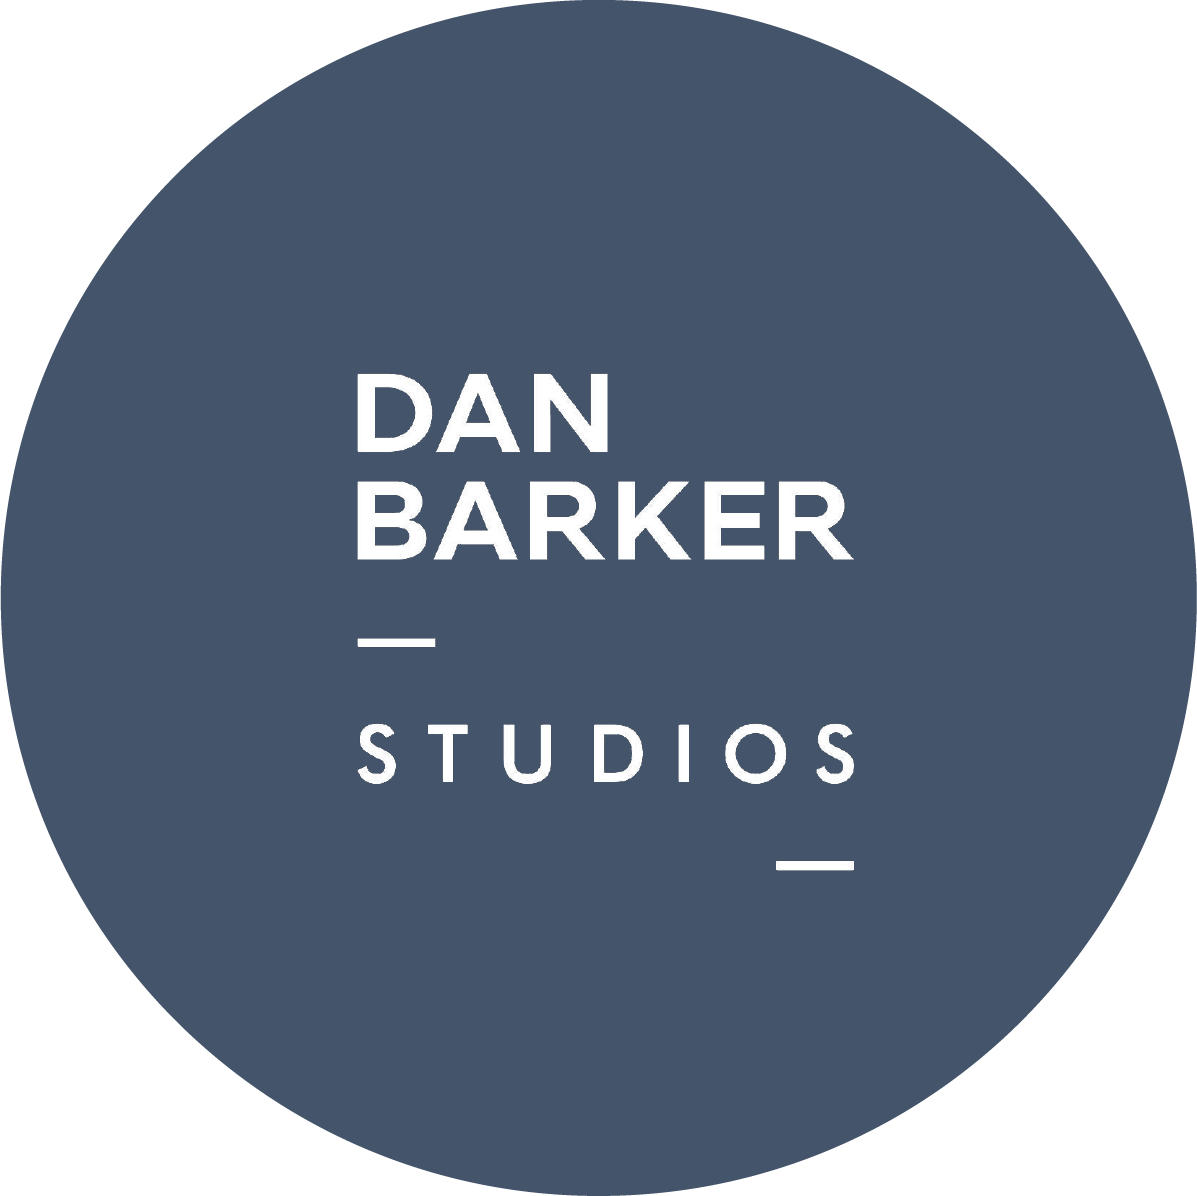 Dan Barker Studios logo in white and in blue circle